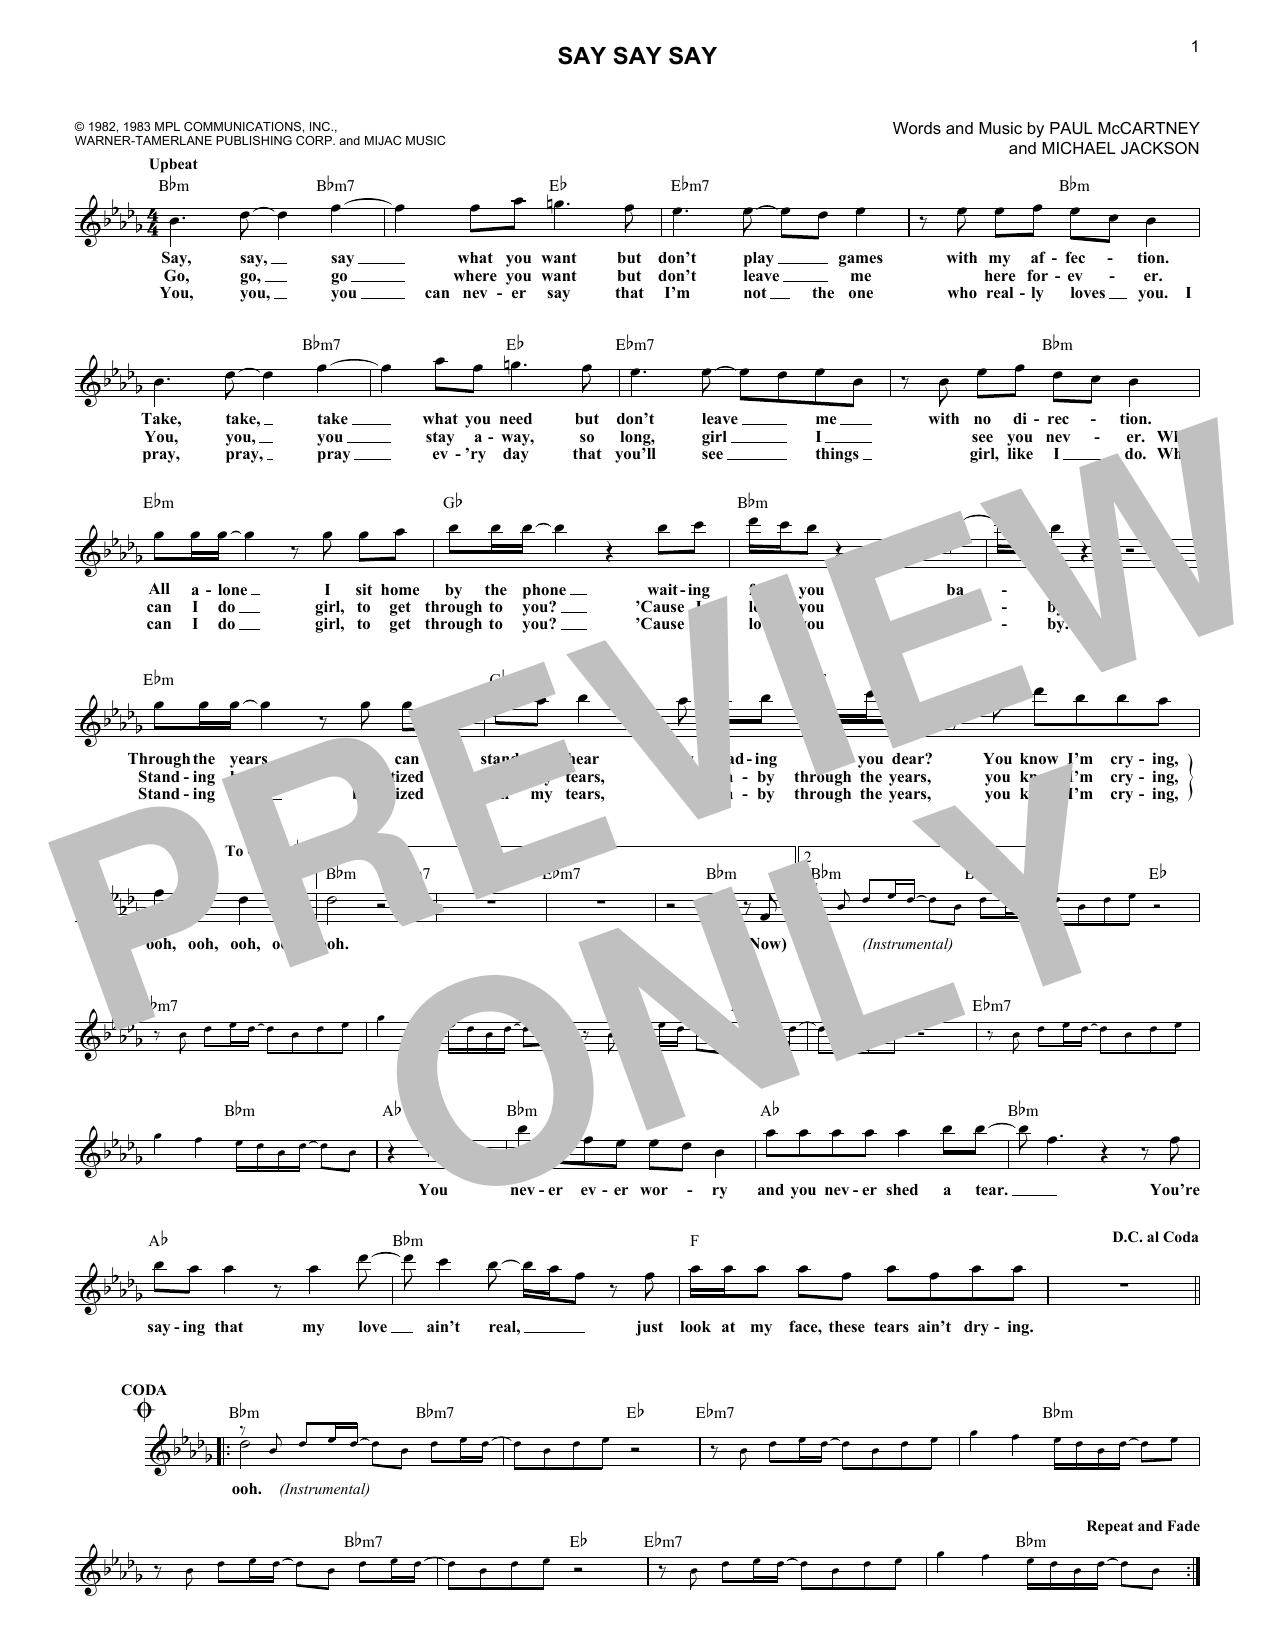 Paul McCartney & Michael Jackson Say Say Say Sheet Music Notes & Chords for Beginner Piano - Download or Print PDF